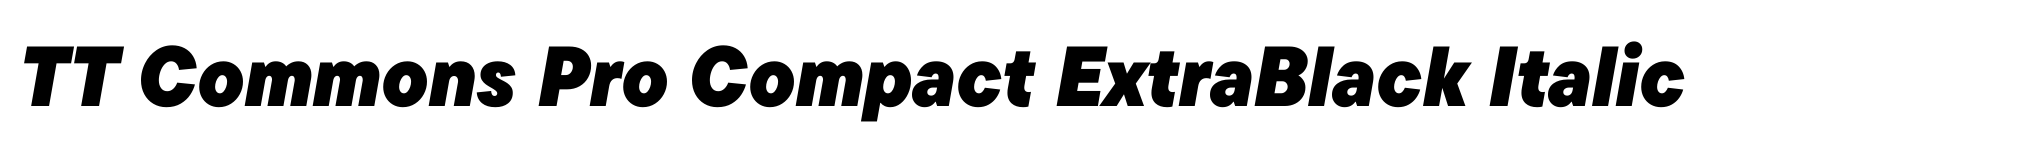 TT Commons Pro Compact ExtraBlack Italic image